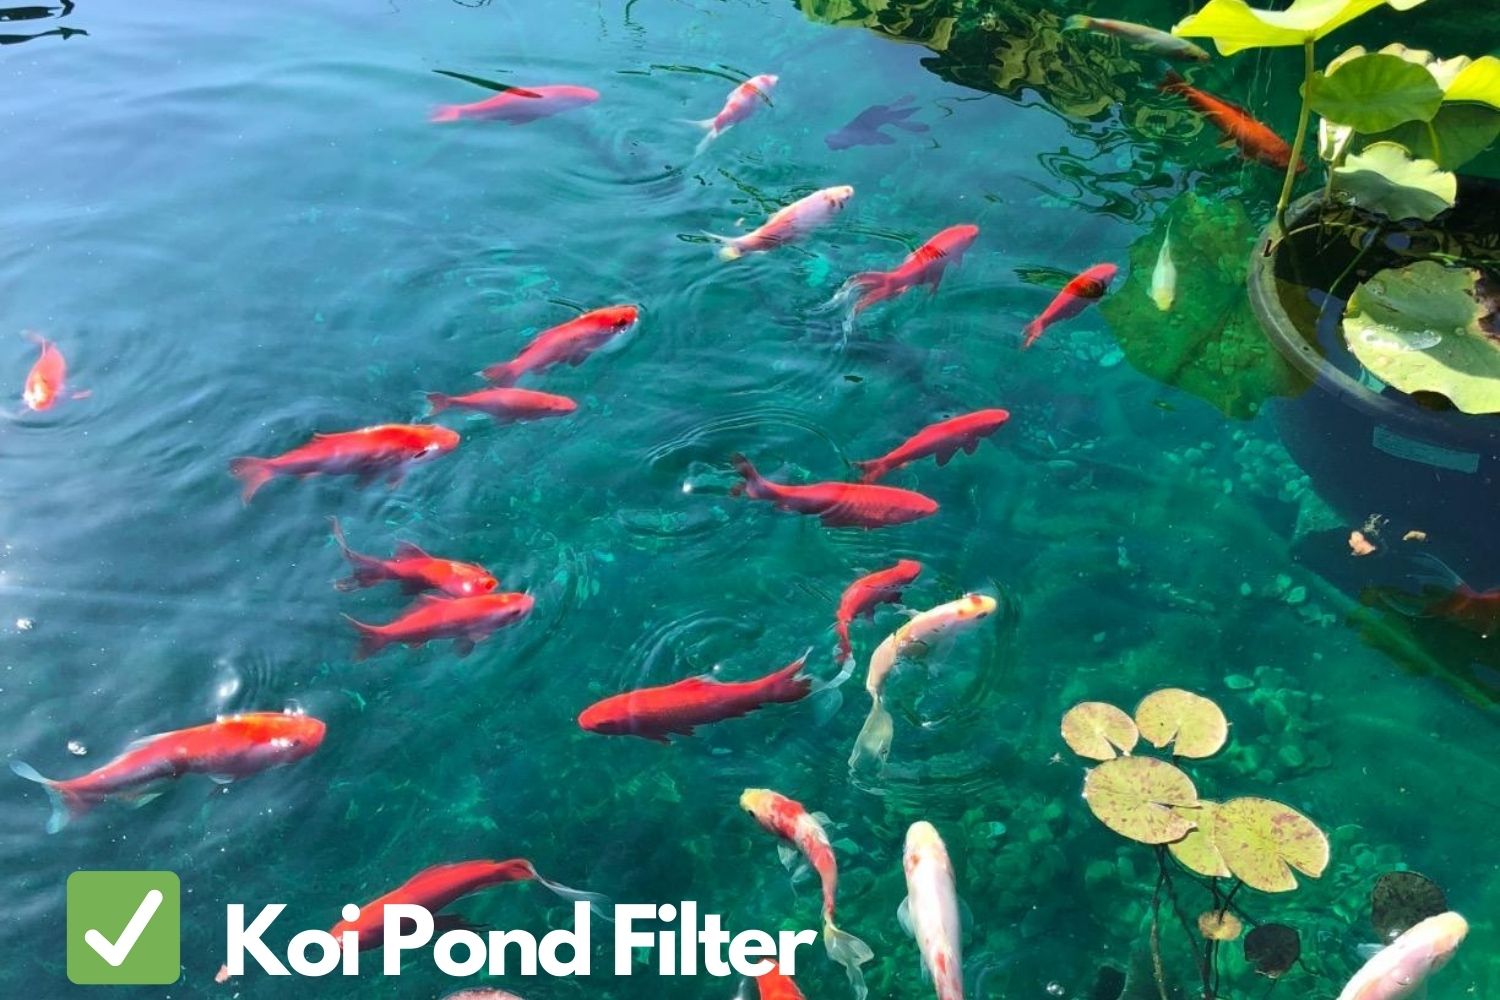 After Using Koi Pond Filter